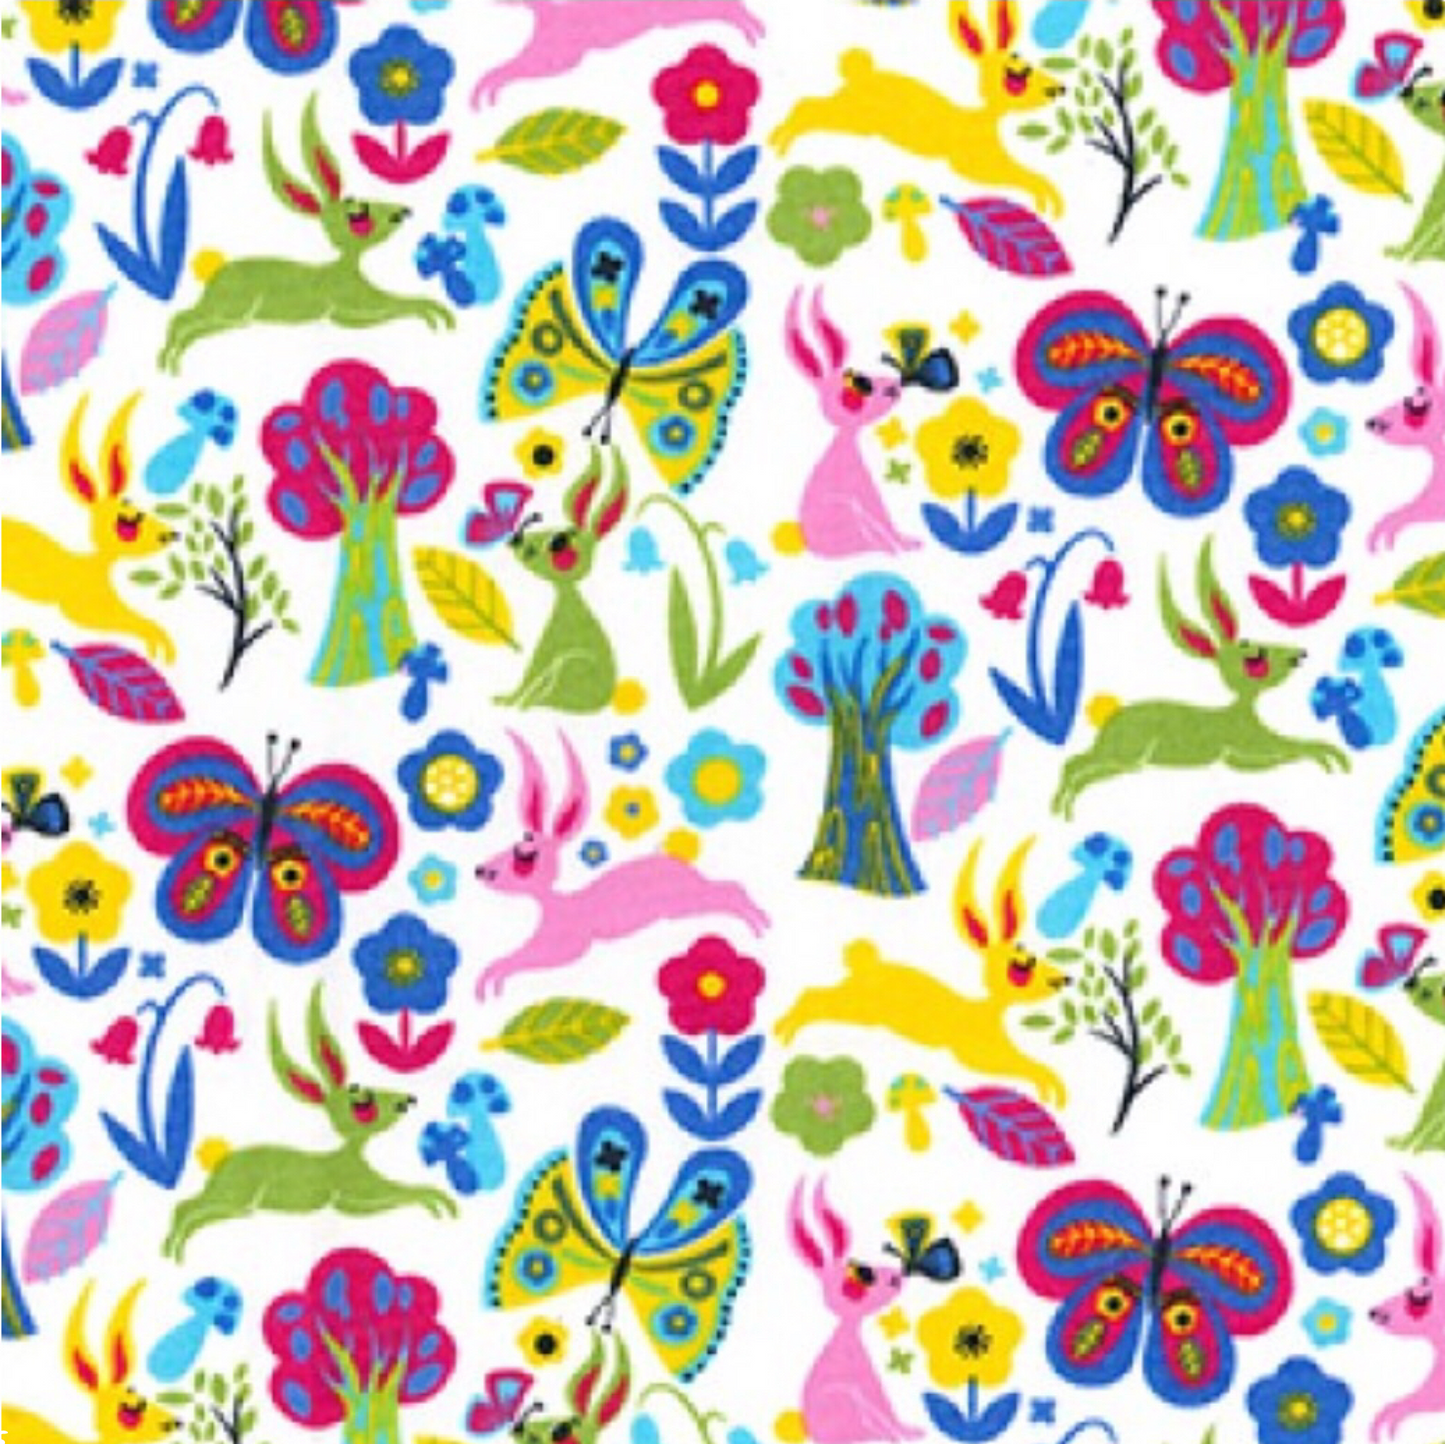 Bunnies and Butterflies on Ivory Fabric Felt - Rosie's Craft Shop Ltd